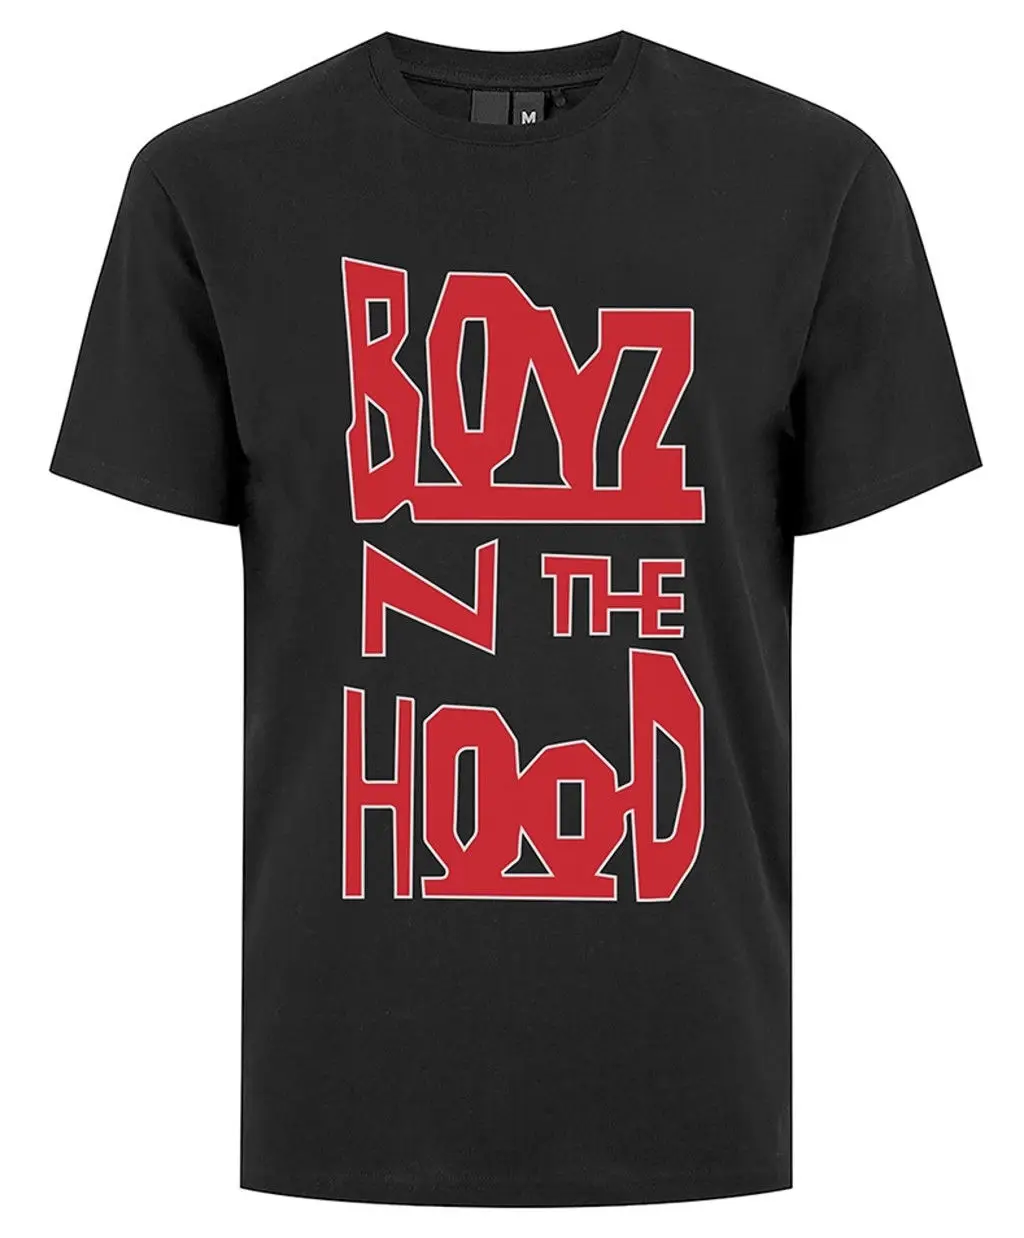 Фото Boyz N The Hood 'Logo' Футболка новая и официальная! 2019 летняя Мужская хлопковая